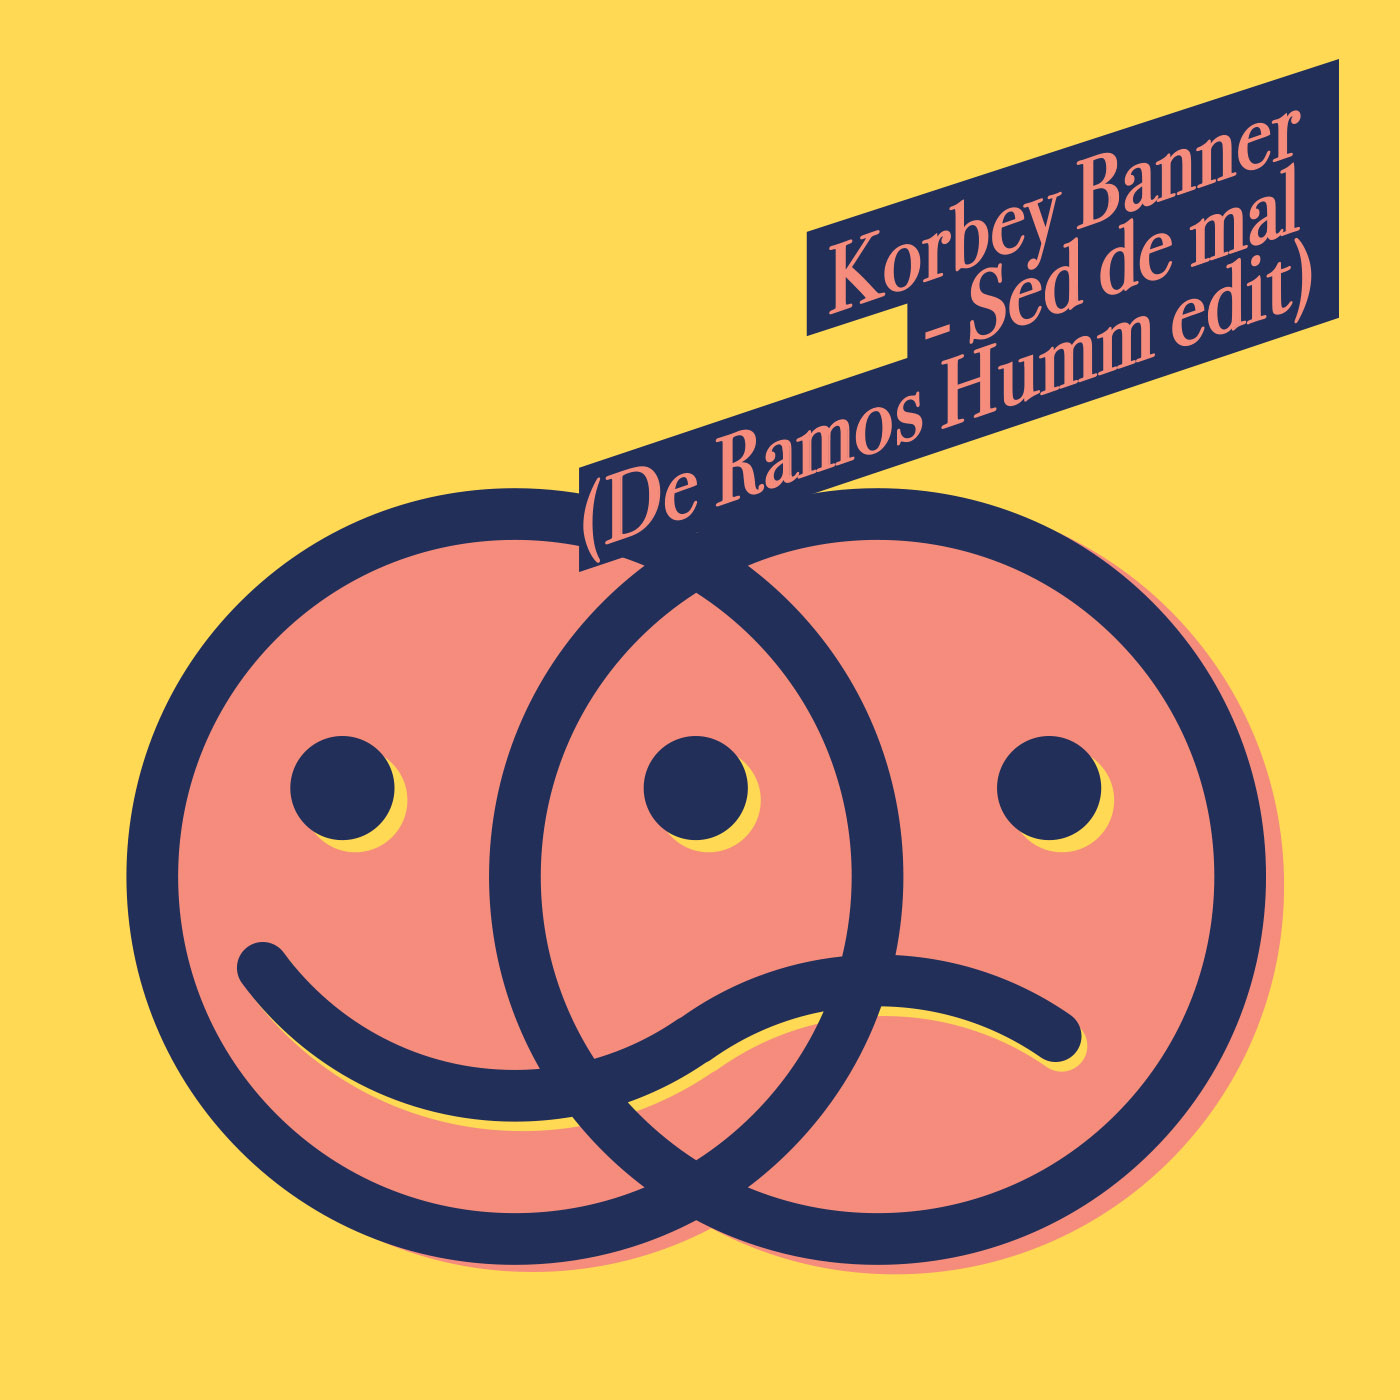 Korbey Banner - Sed de mal (De Ramos Humm edit)